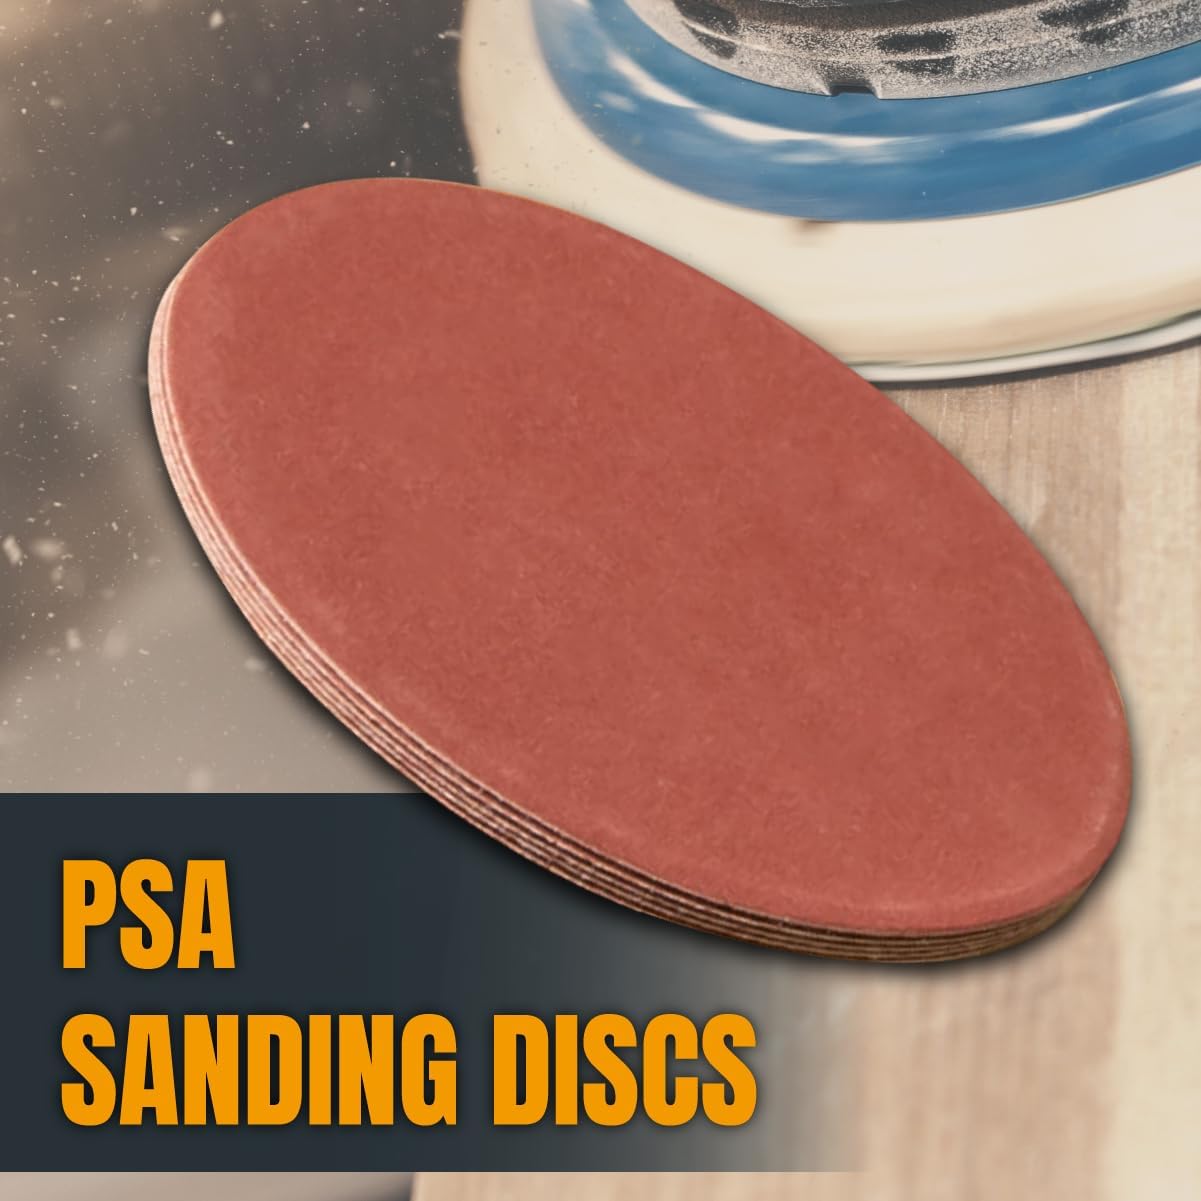 POWERTEC 110260 6 Inch PSA Sanding Discs, 100 Grit, Aluminum Oxide Adhesive Sandpaper for 4x36 Belt Sander, 10PK